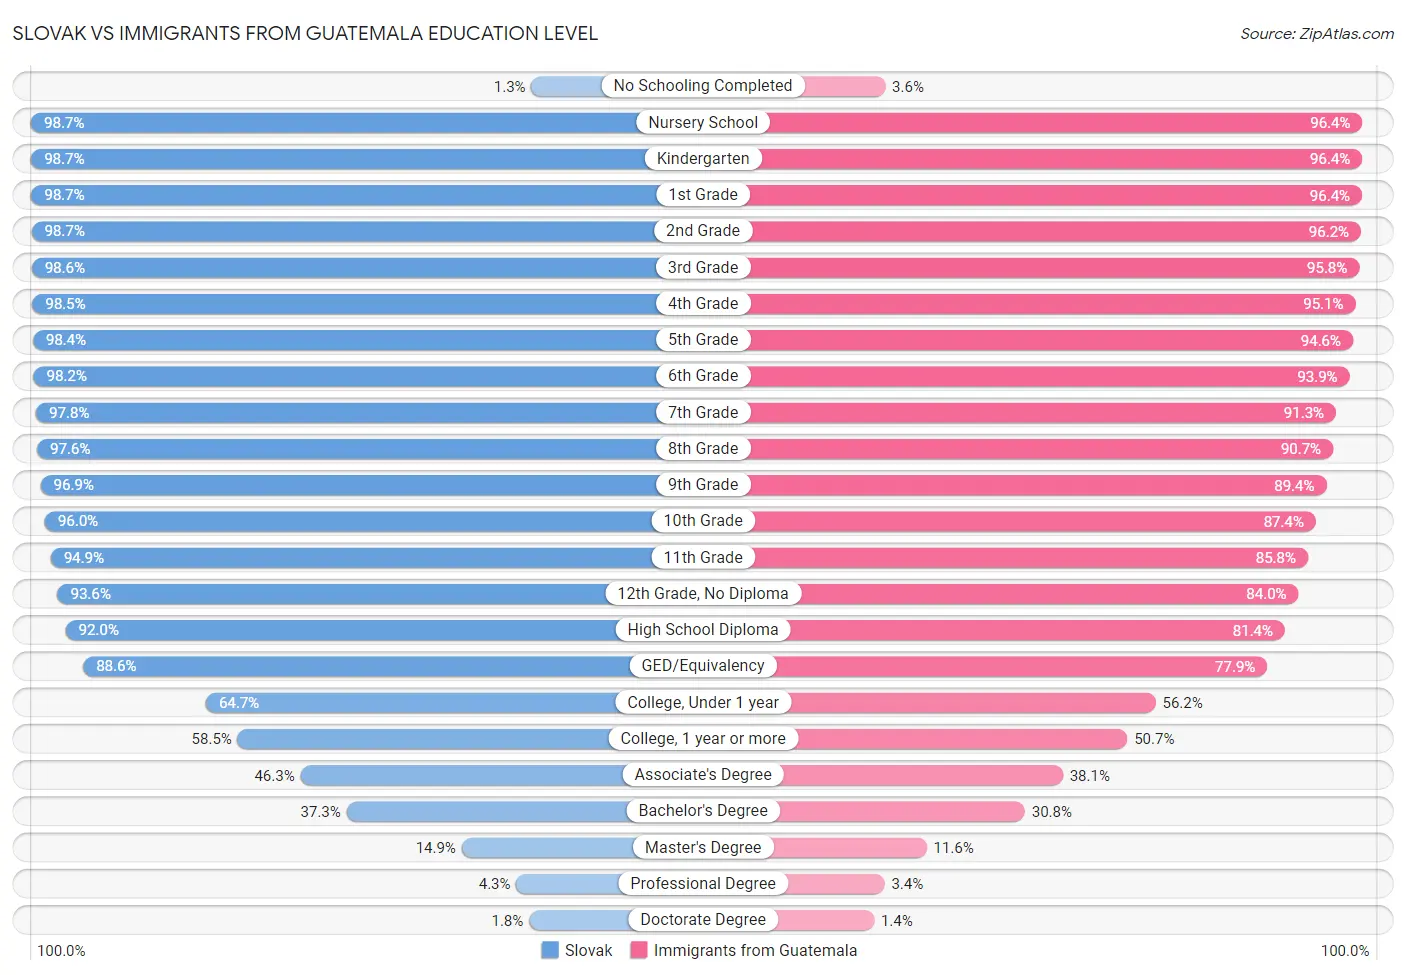 Slovak vs Immigrants from Guatemala Education Level